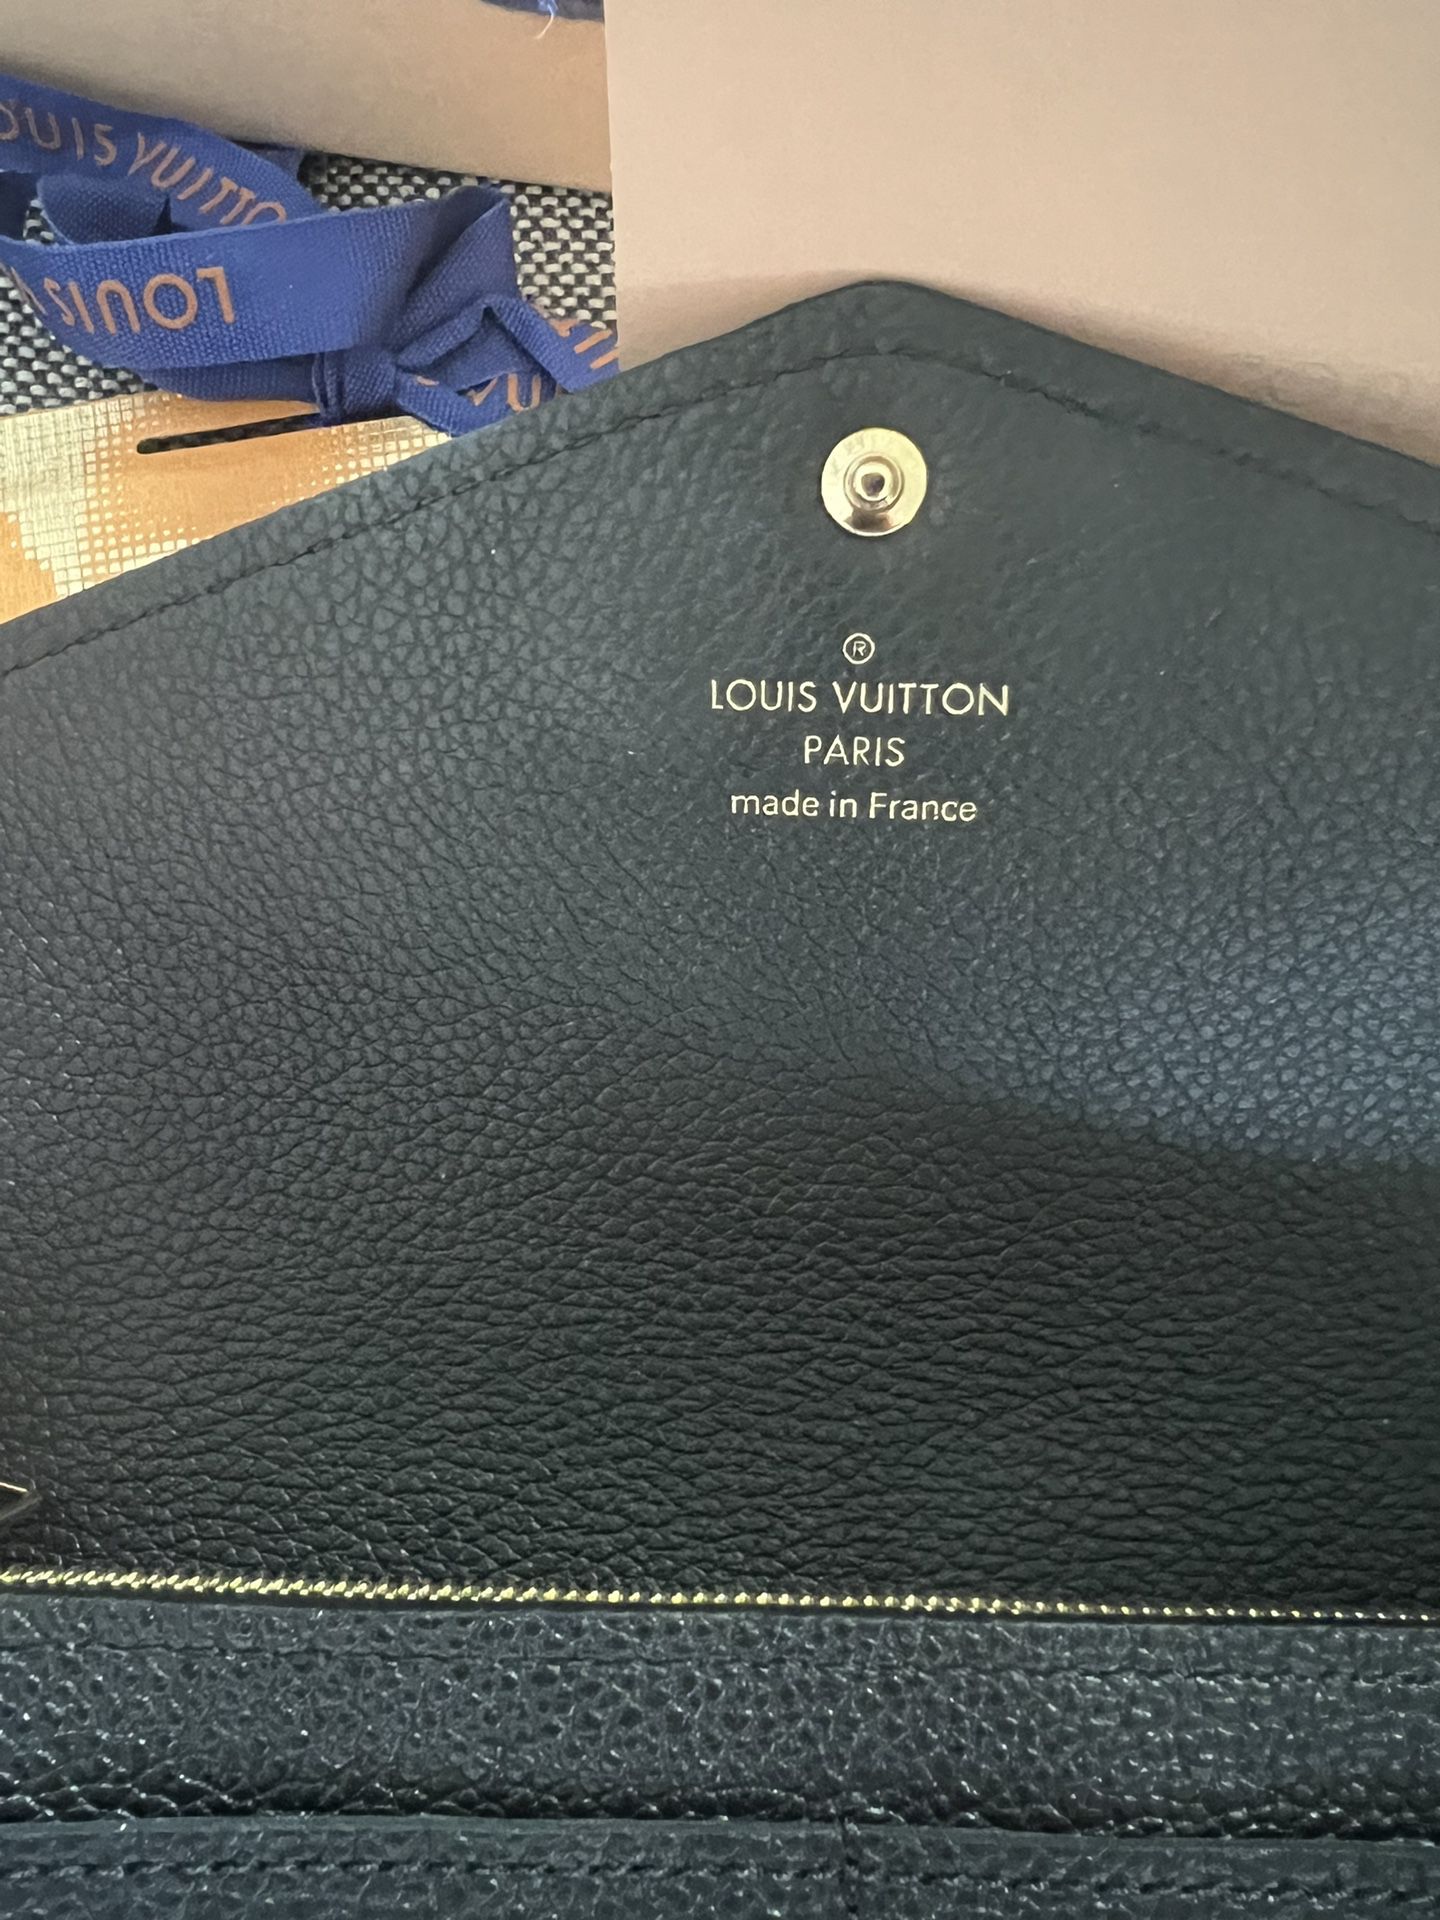 Louis Vuitton Wallet Sarah Monogram for Sale in Temecula, CA - OfferUp